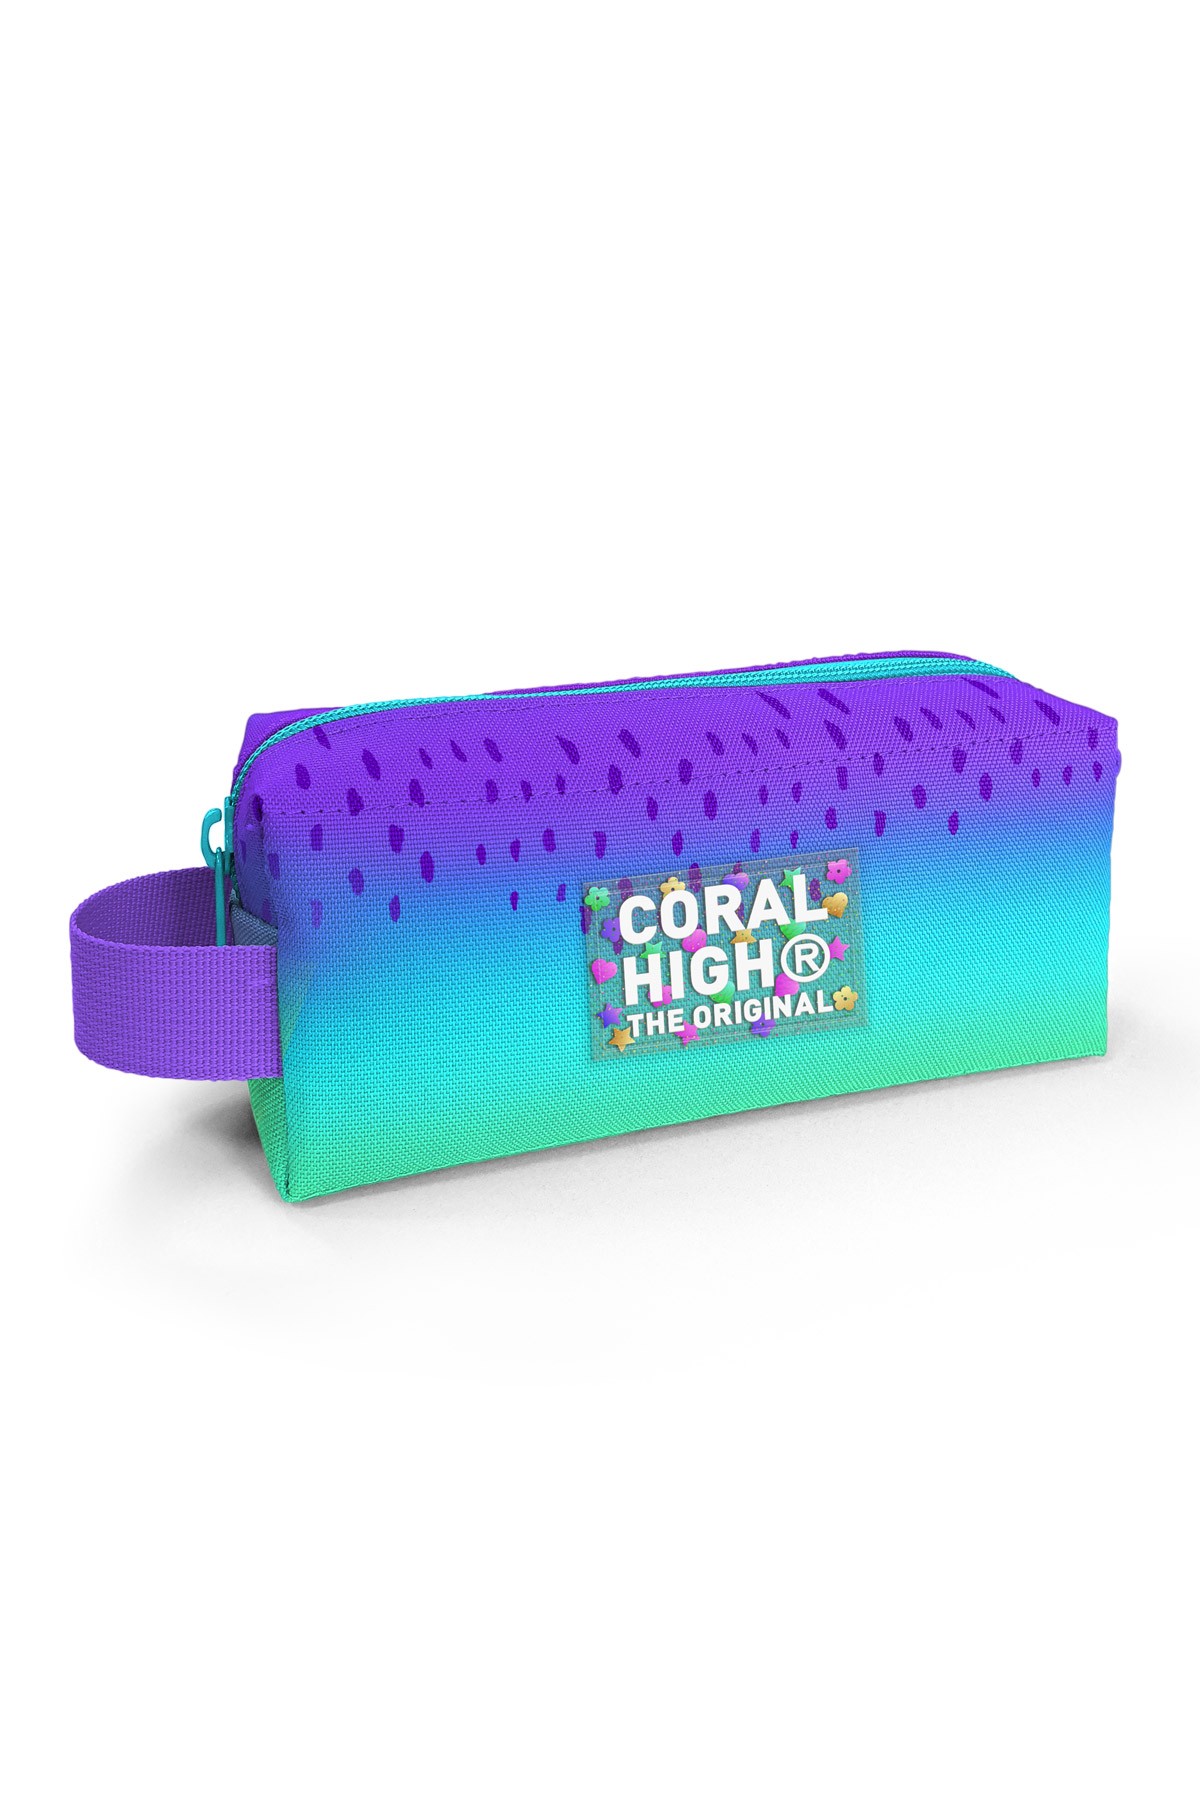 Coral High Kids Mor Lila Renk Geçişli Kalem Çantası 22077